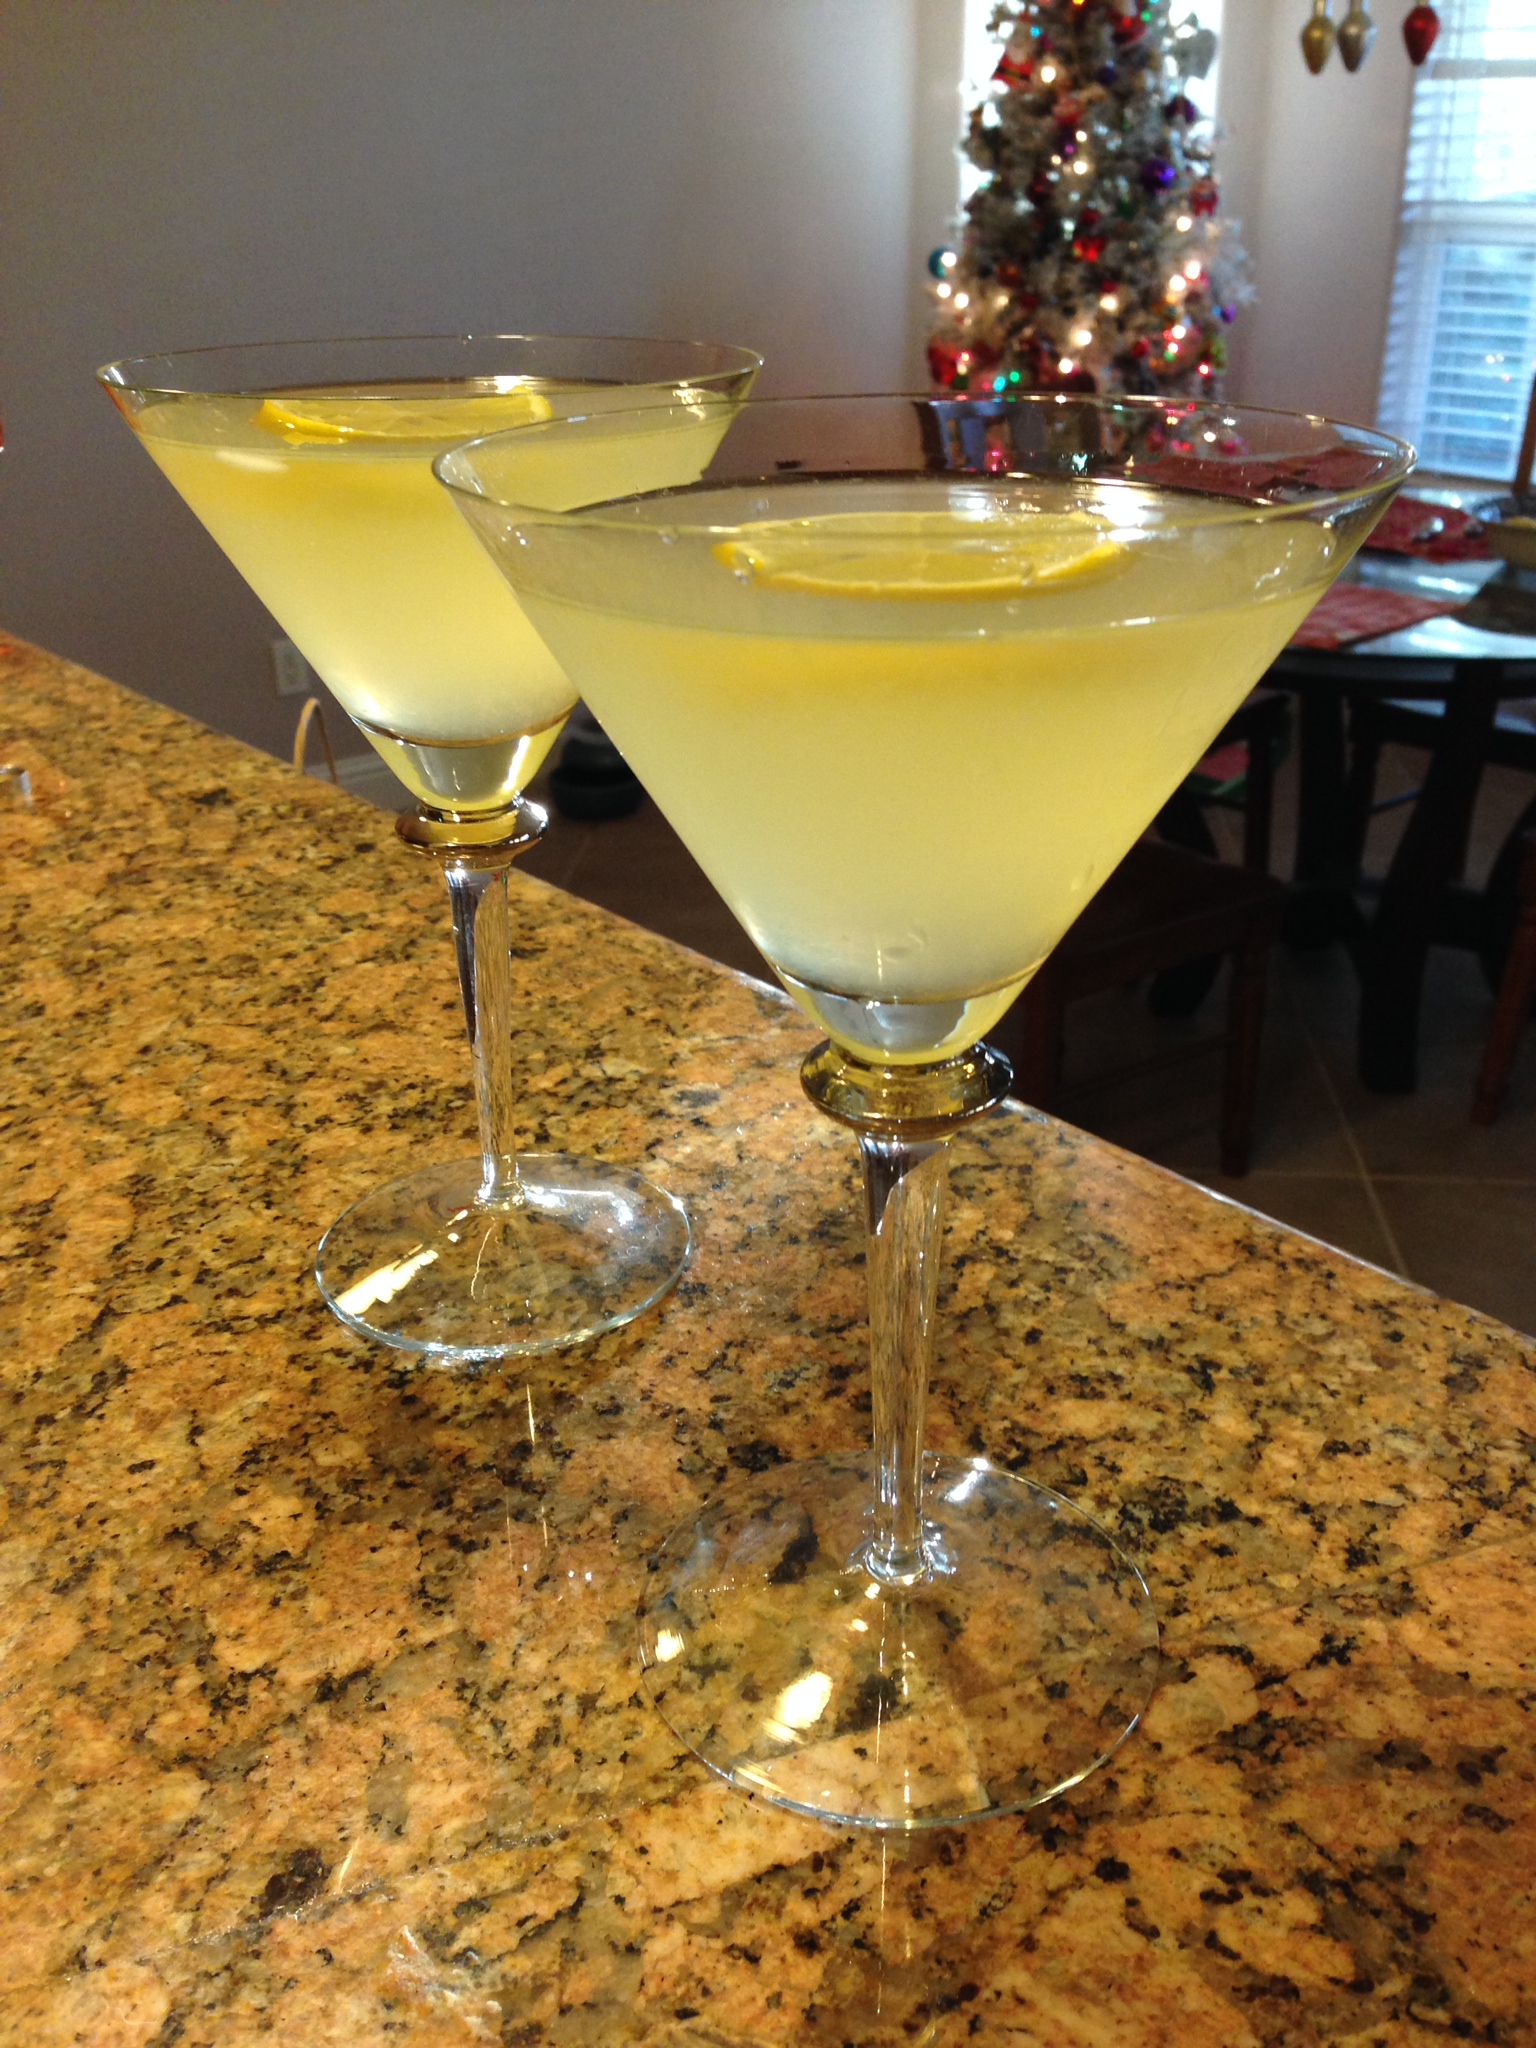 When life gives you lemons.....you make lemon drop martinis!